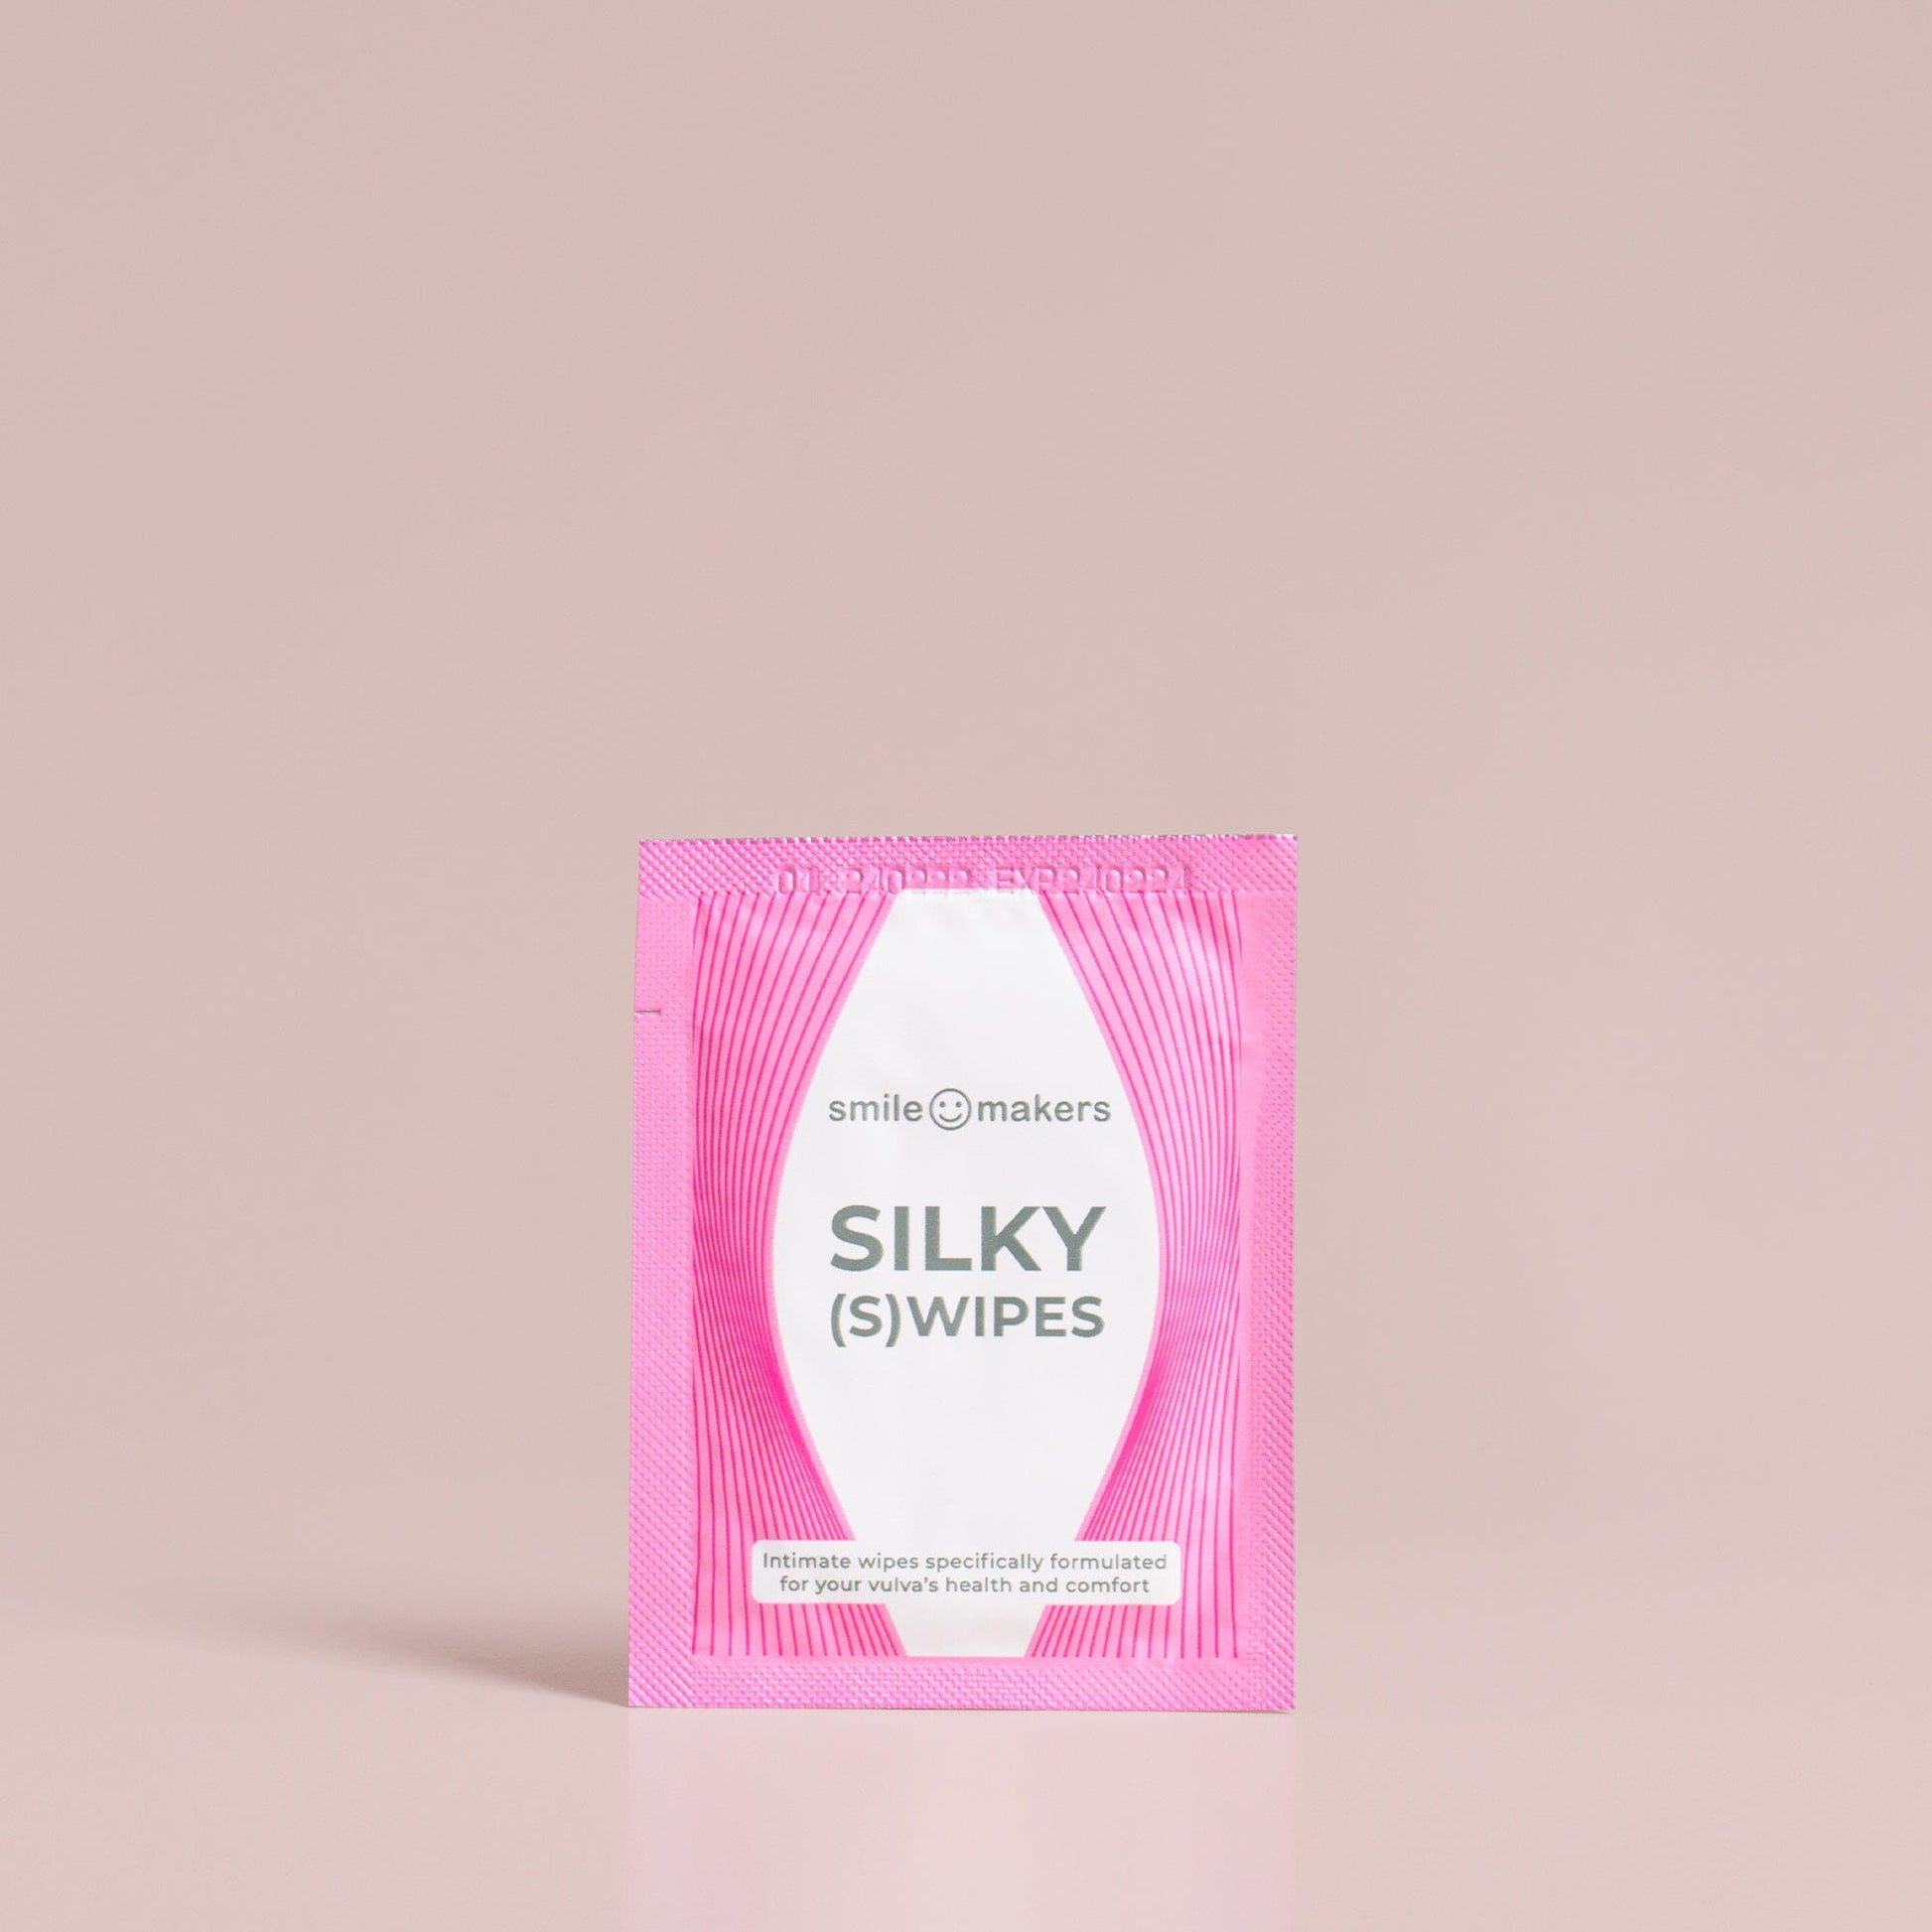 SMILE MAKERS Silky (S)wipes 純素私密濕紙巾 12 片獨立包裝 購買